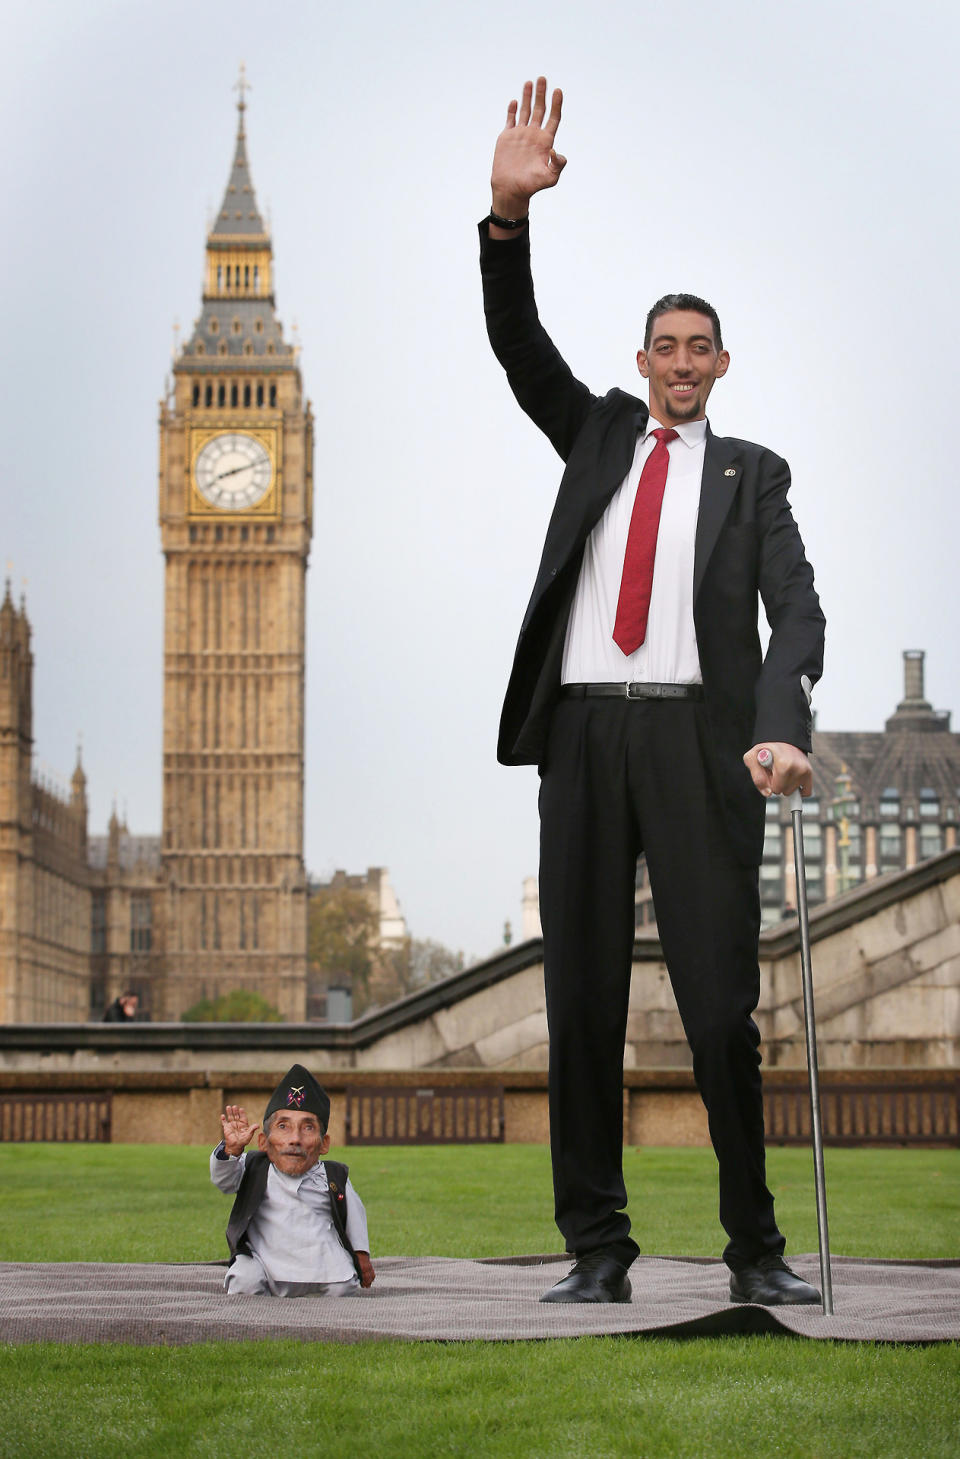 World's tallest man meets world's smallest man